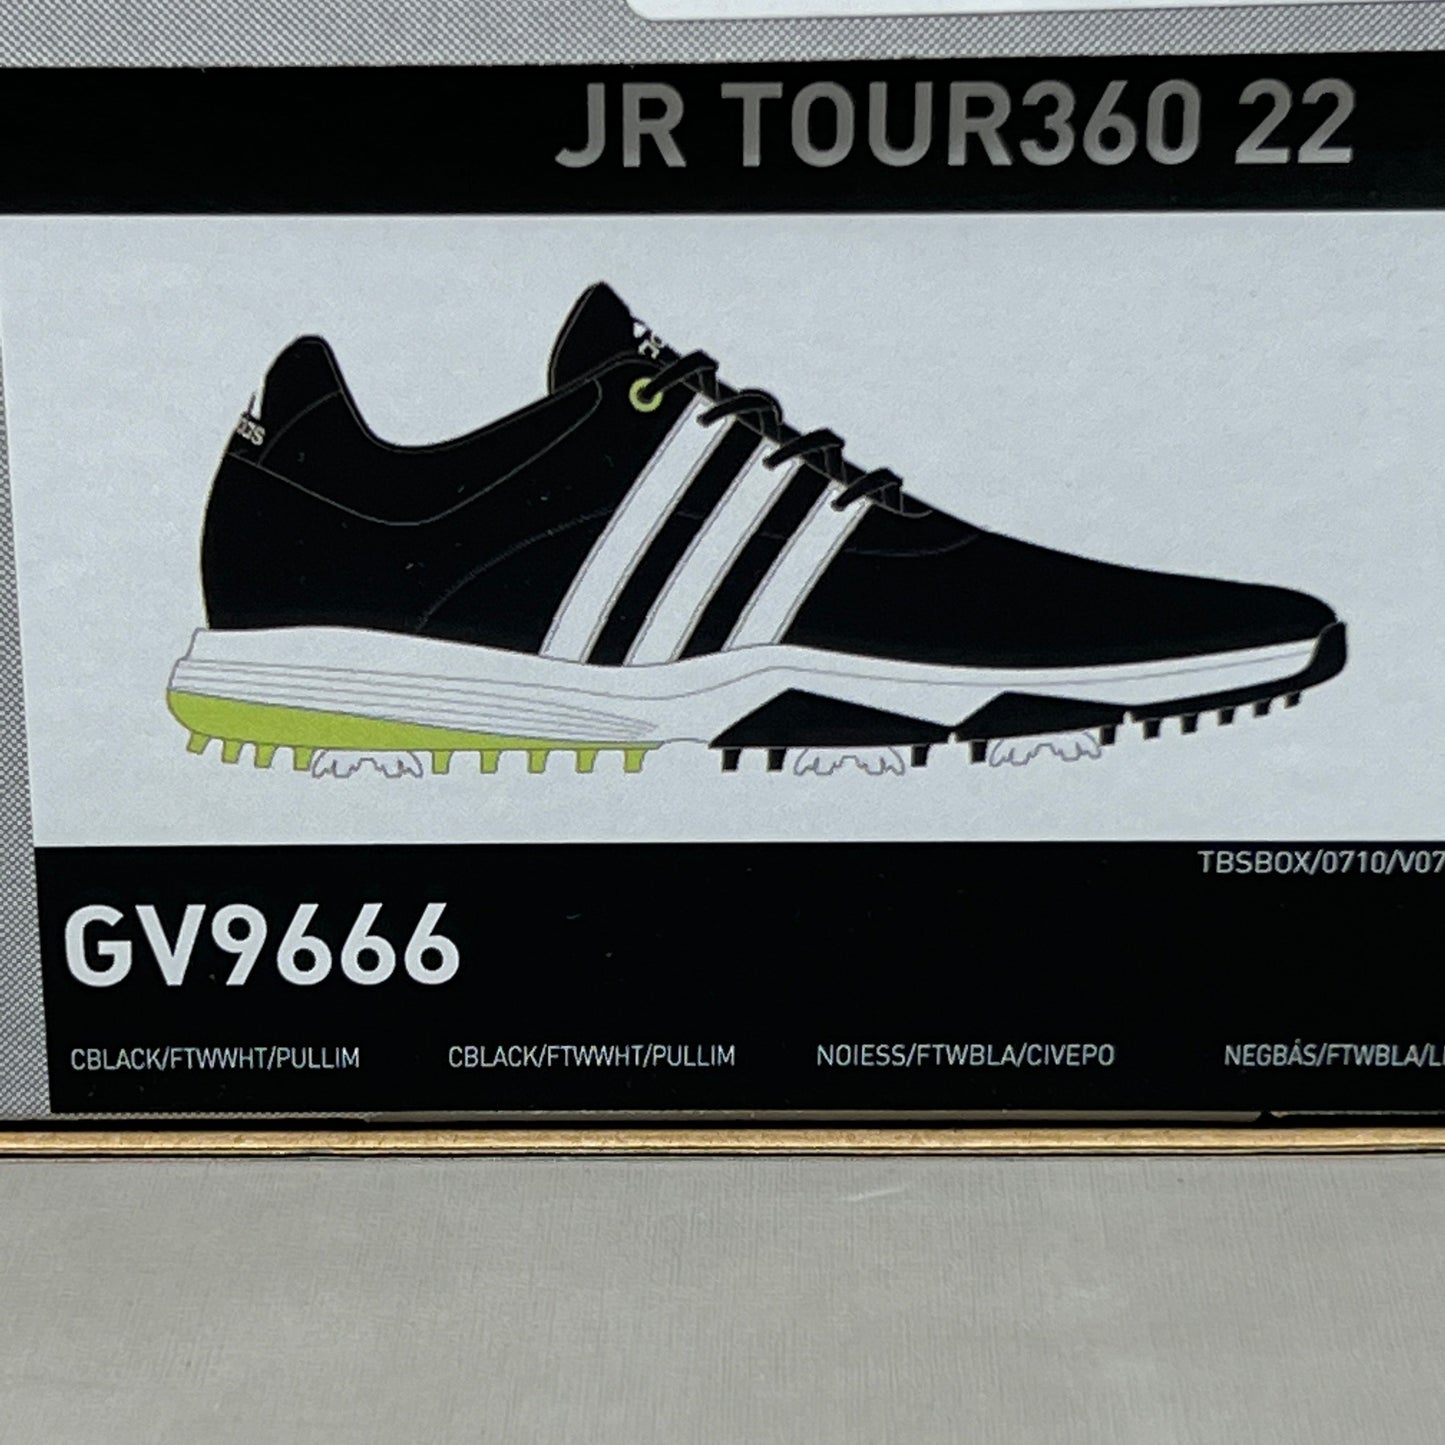 ADIDAS Golf Shoes JR Tour360 22 Youth Sz 5.5 Black / White / Lime GV9666 (New)